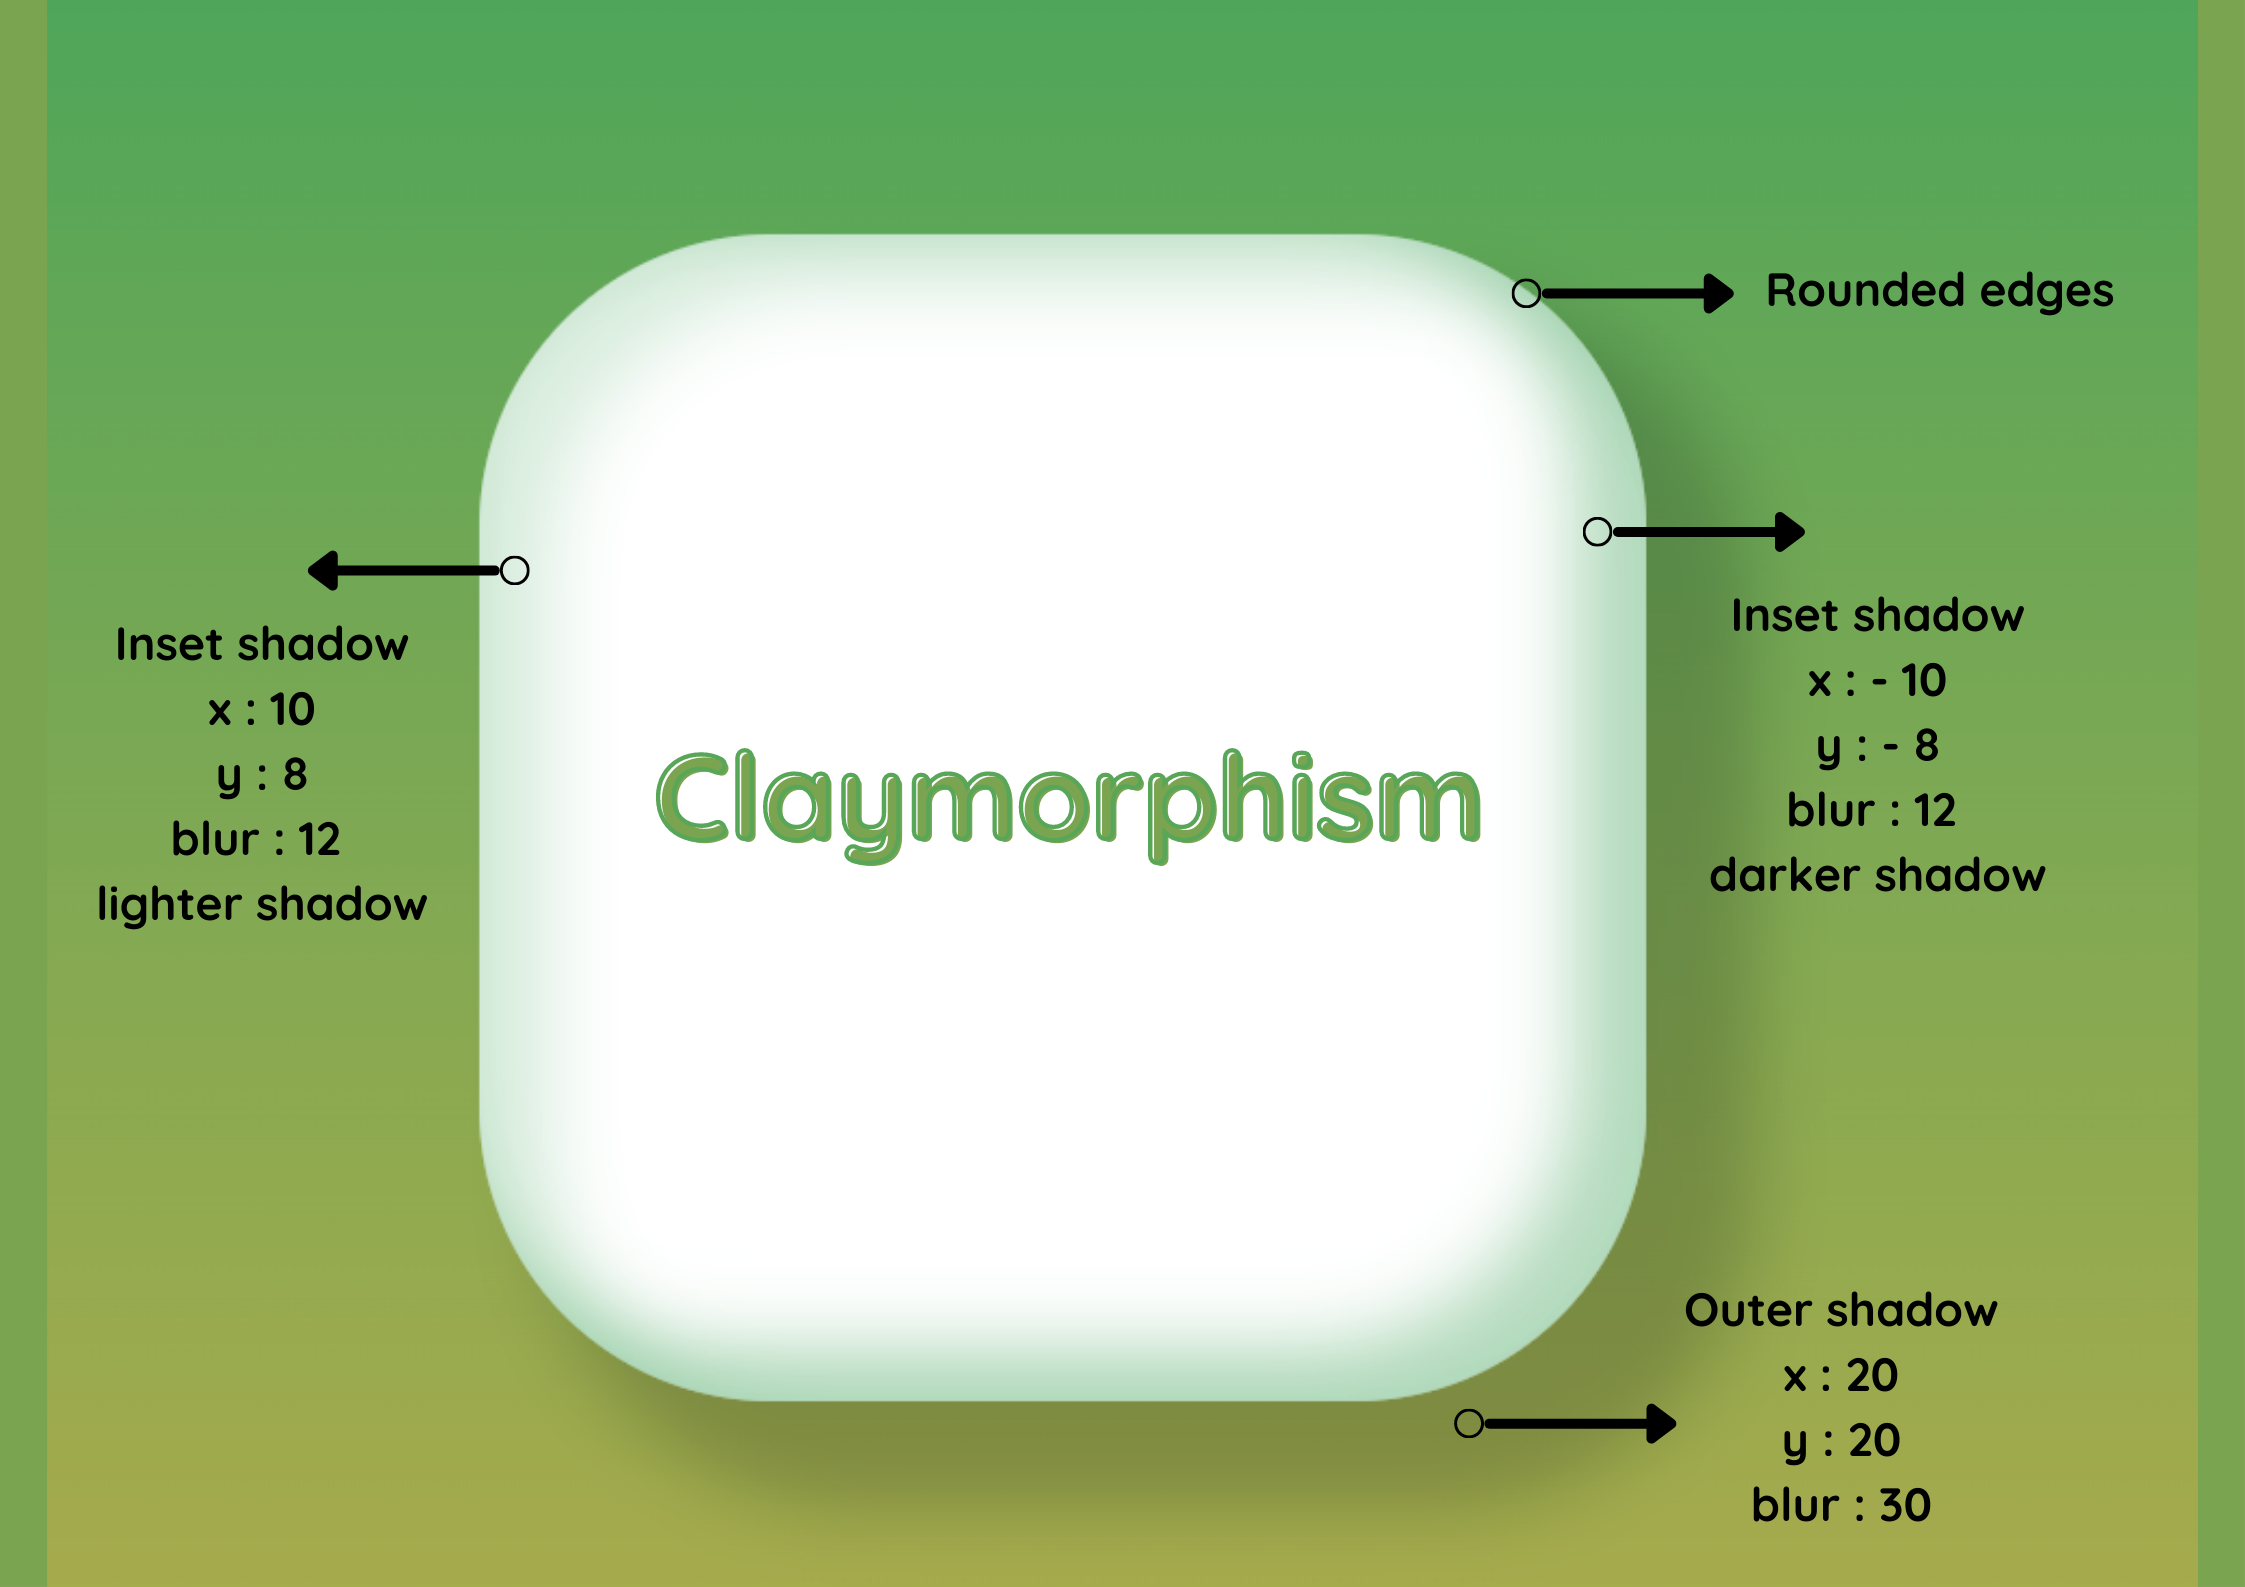 Claymorphism explained